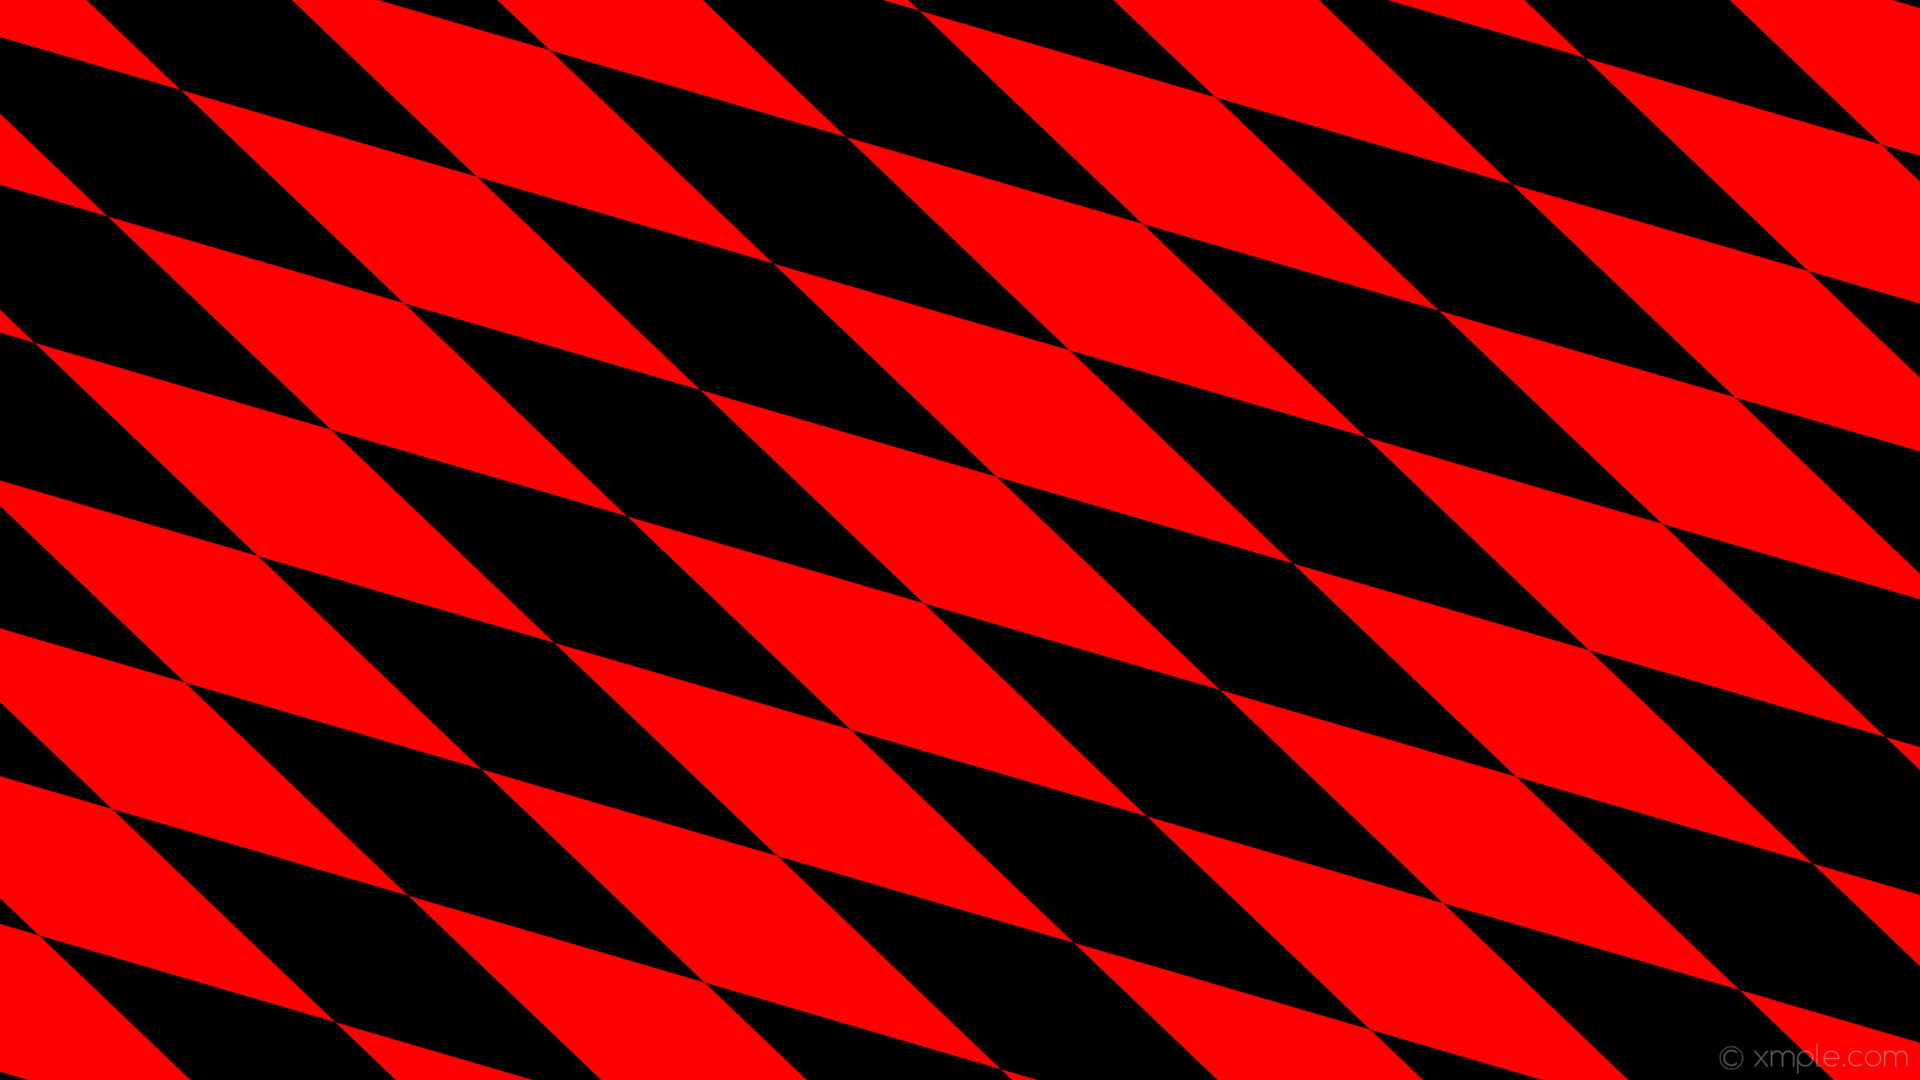 1920x1080 wallpaper rhombus diamond red black lozenge #ff0000 #000000 150Â° 600px 146px